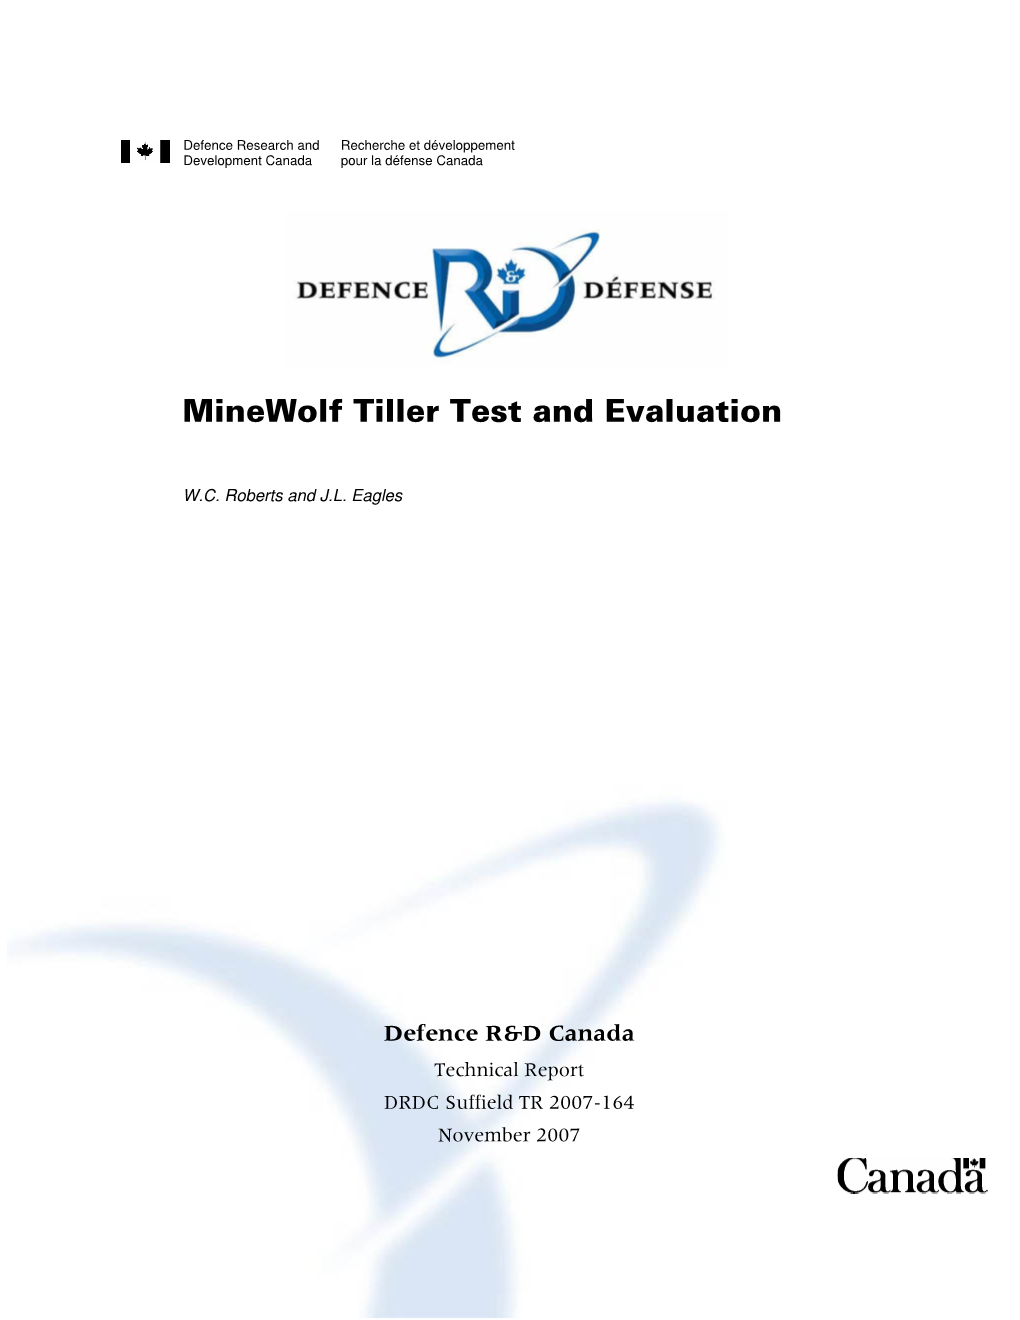 Minewolf Tiller Test and Evaluation